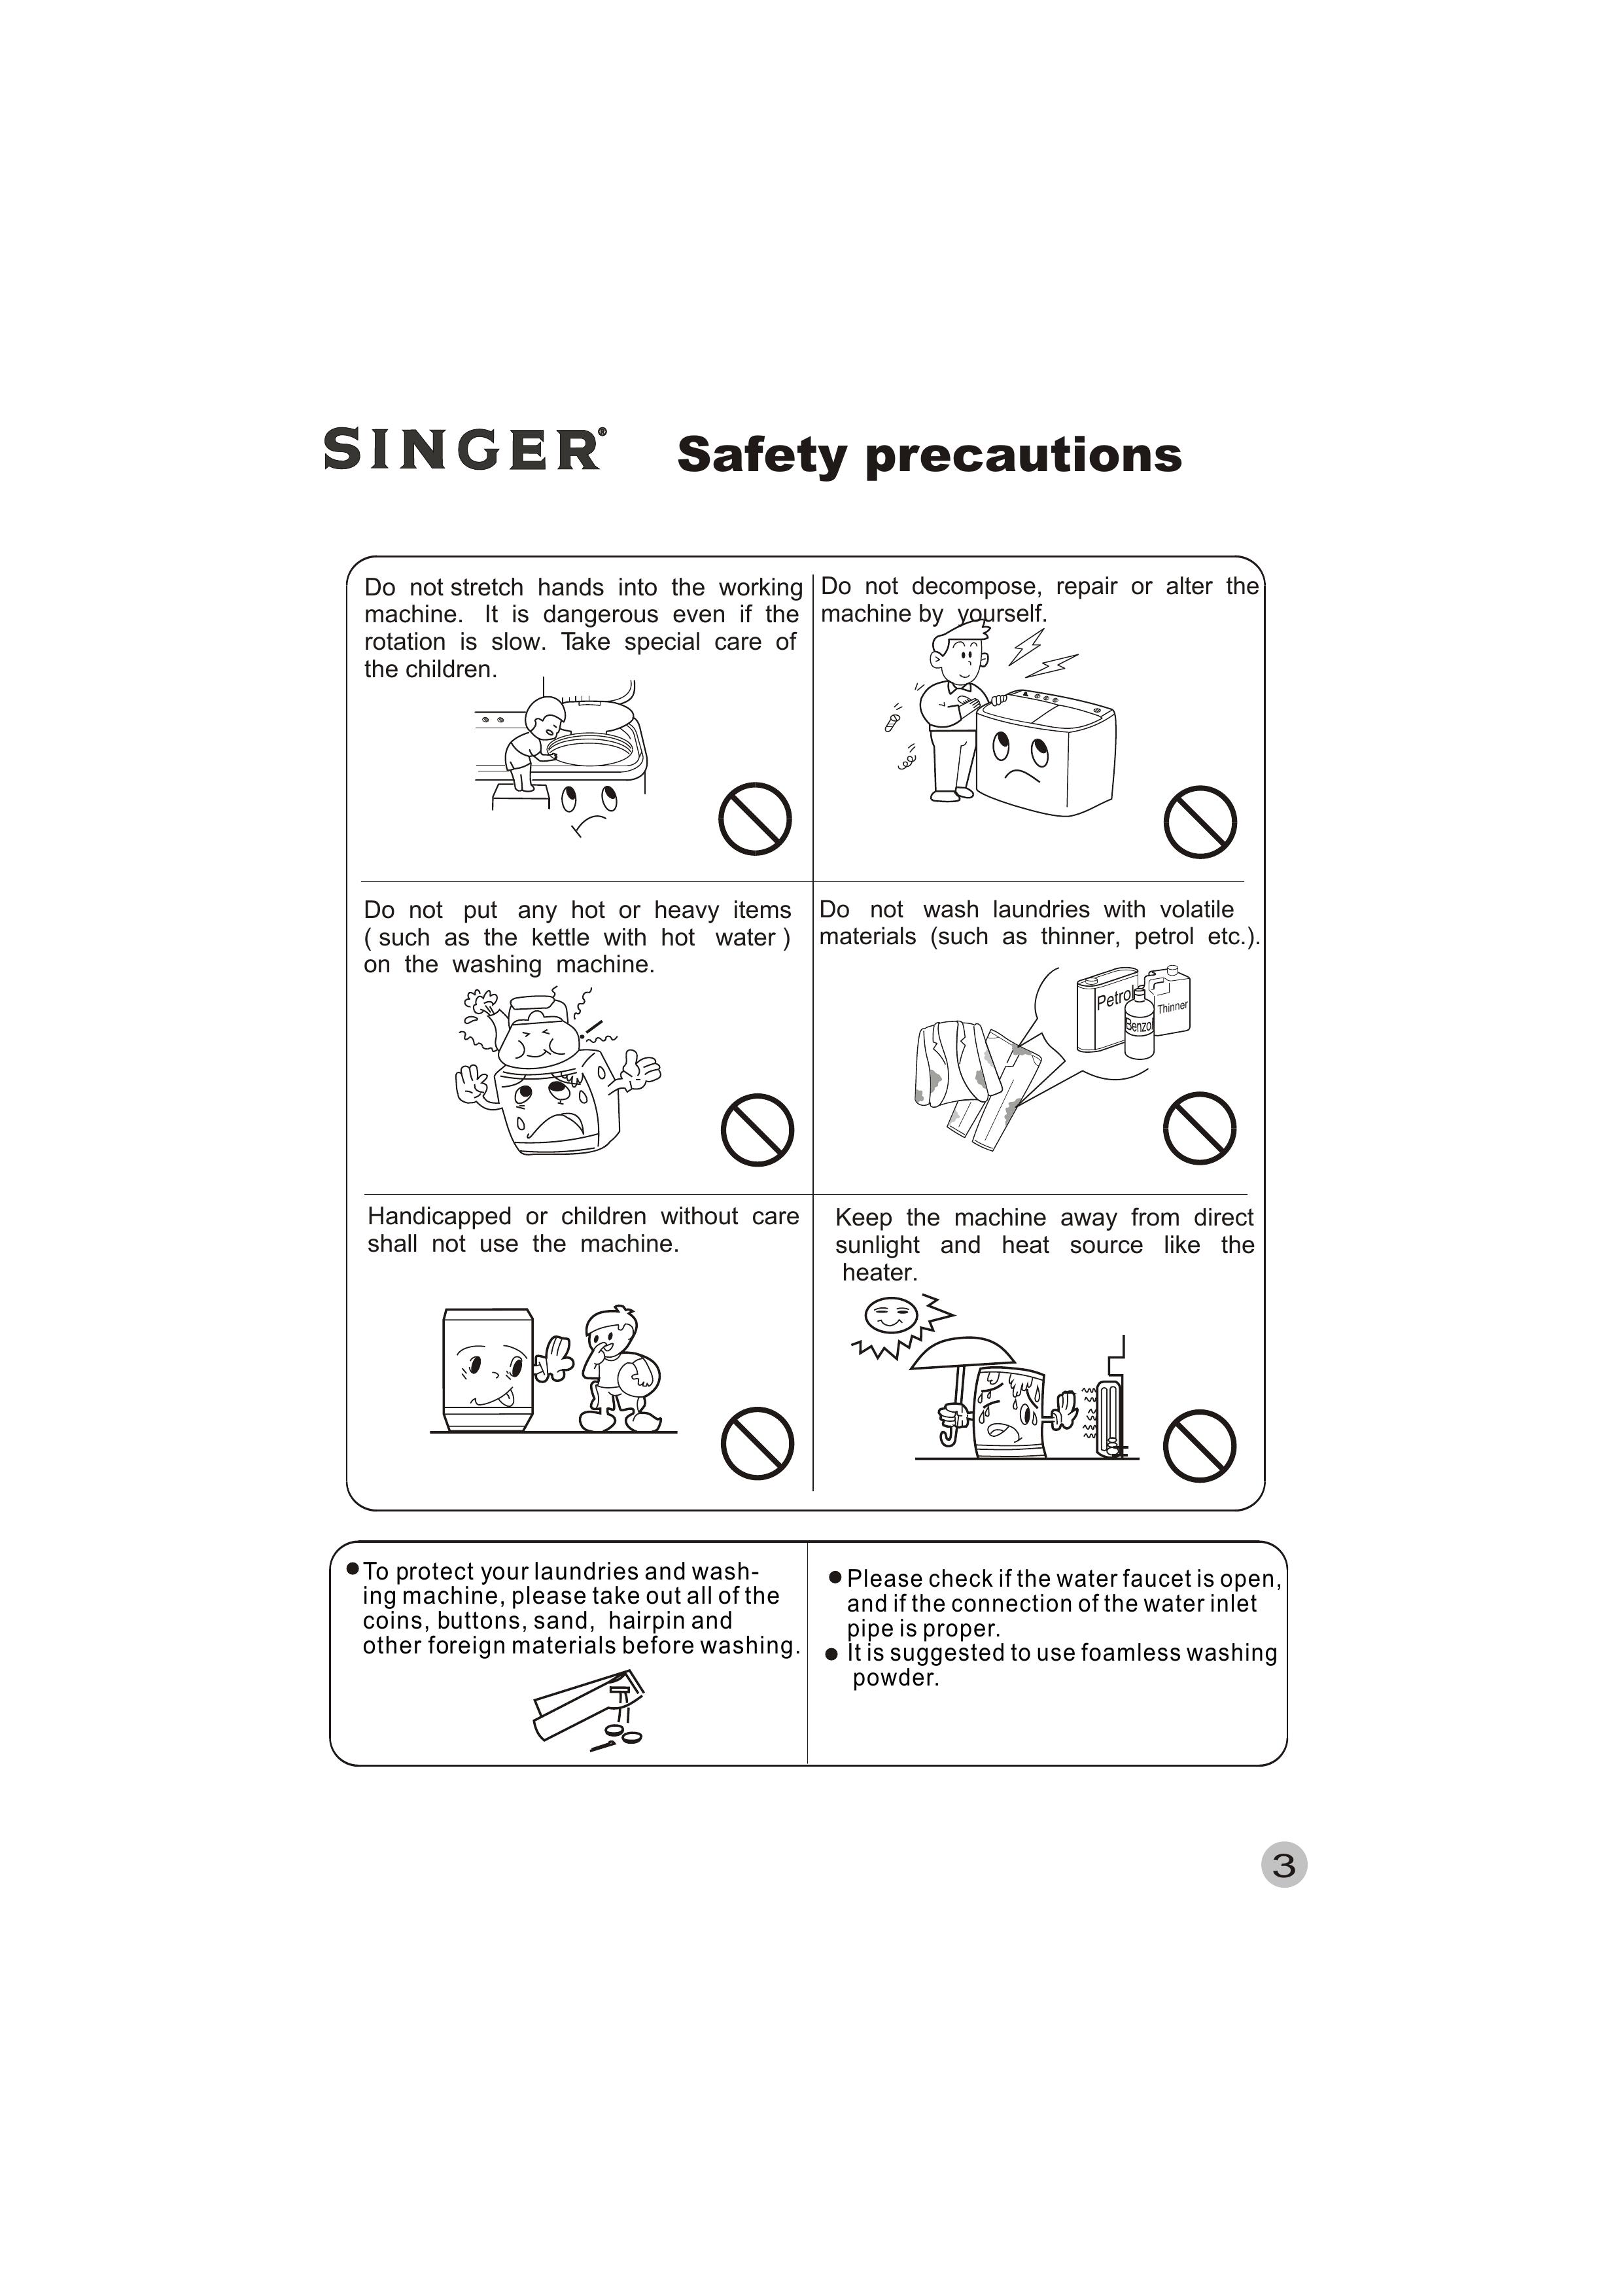 Singer WT5113 Washer/Dryer User Manual (Page 4)